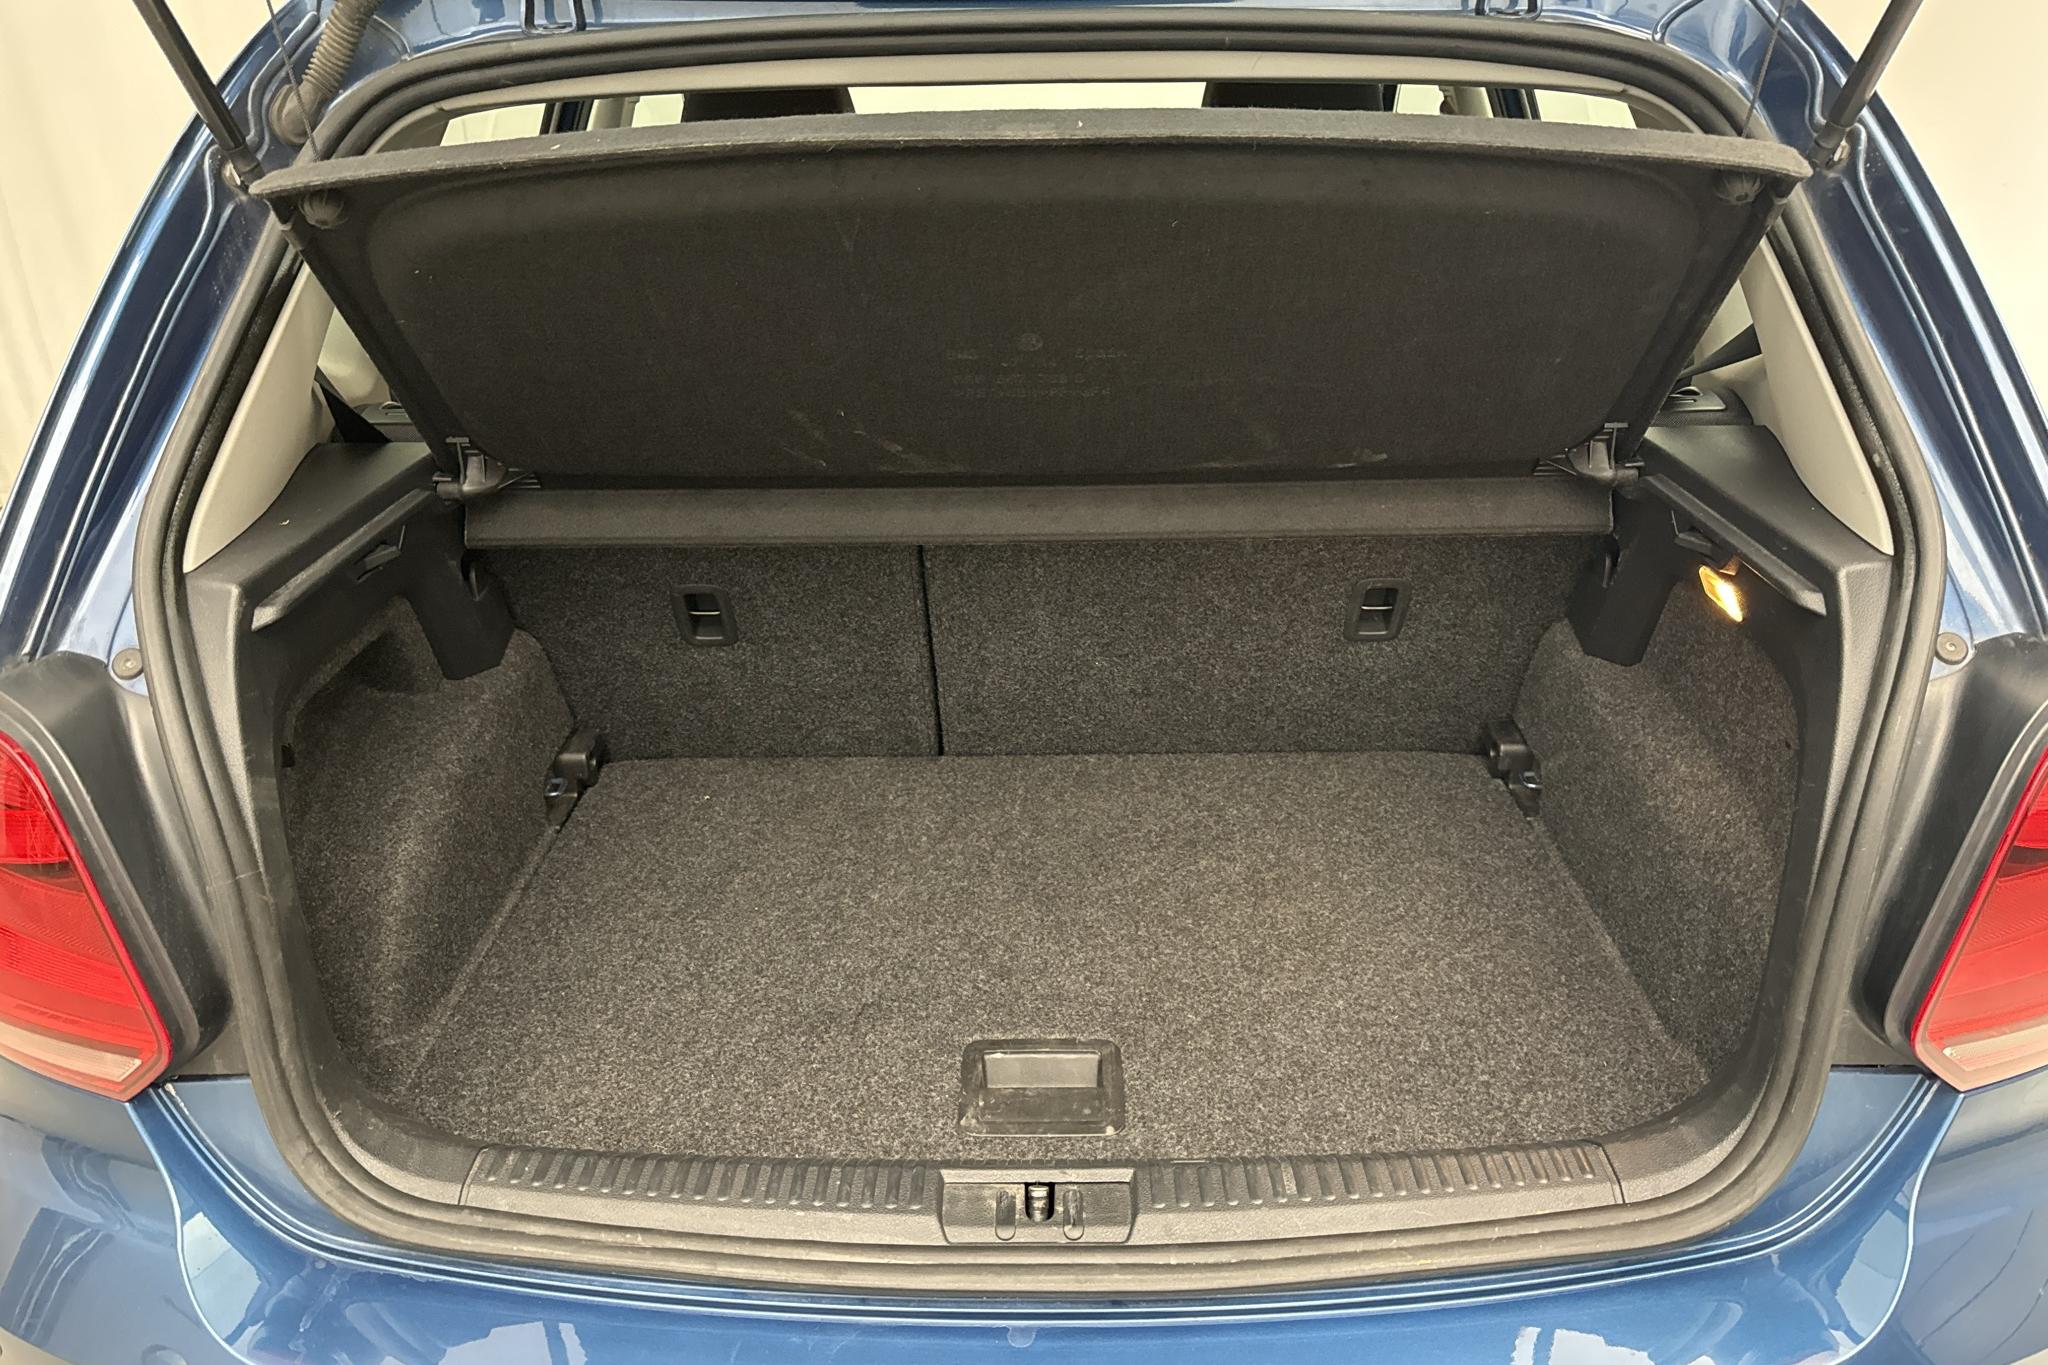 VW Polo 1.2 TSI 5dr (90hk) - 105 440 km - Manualna - niebieski - 2015